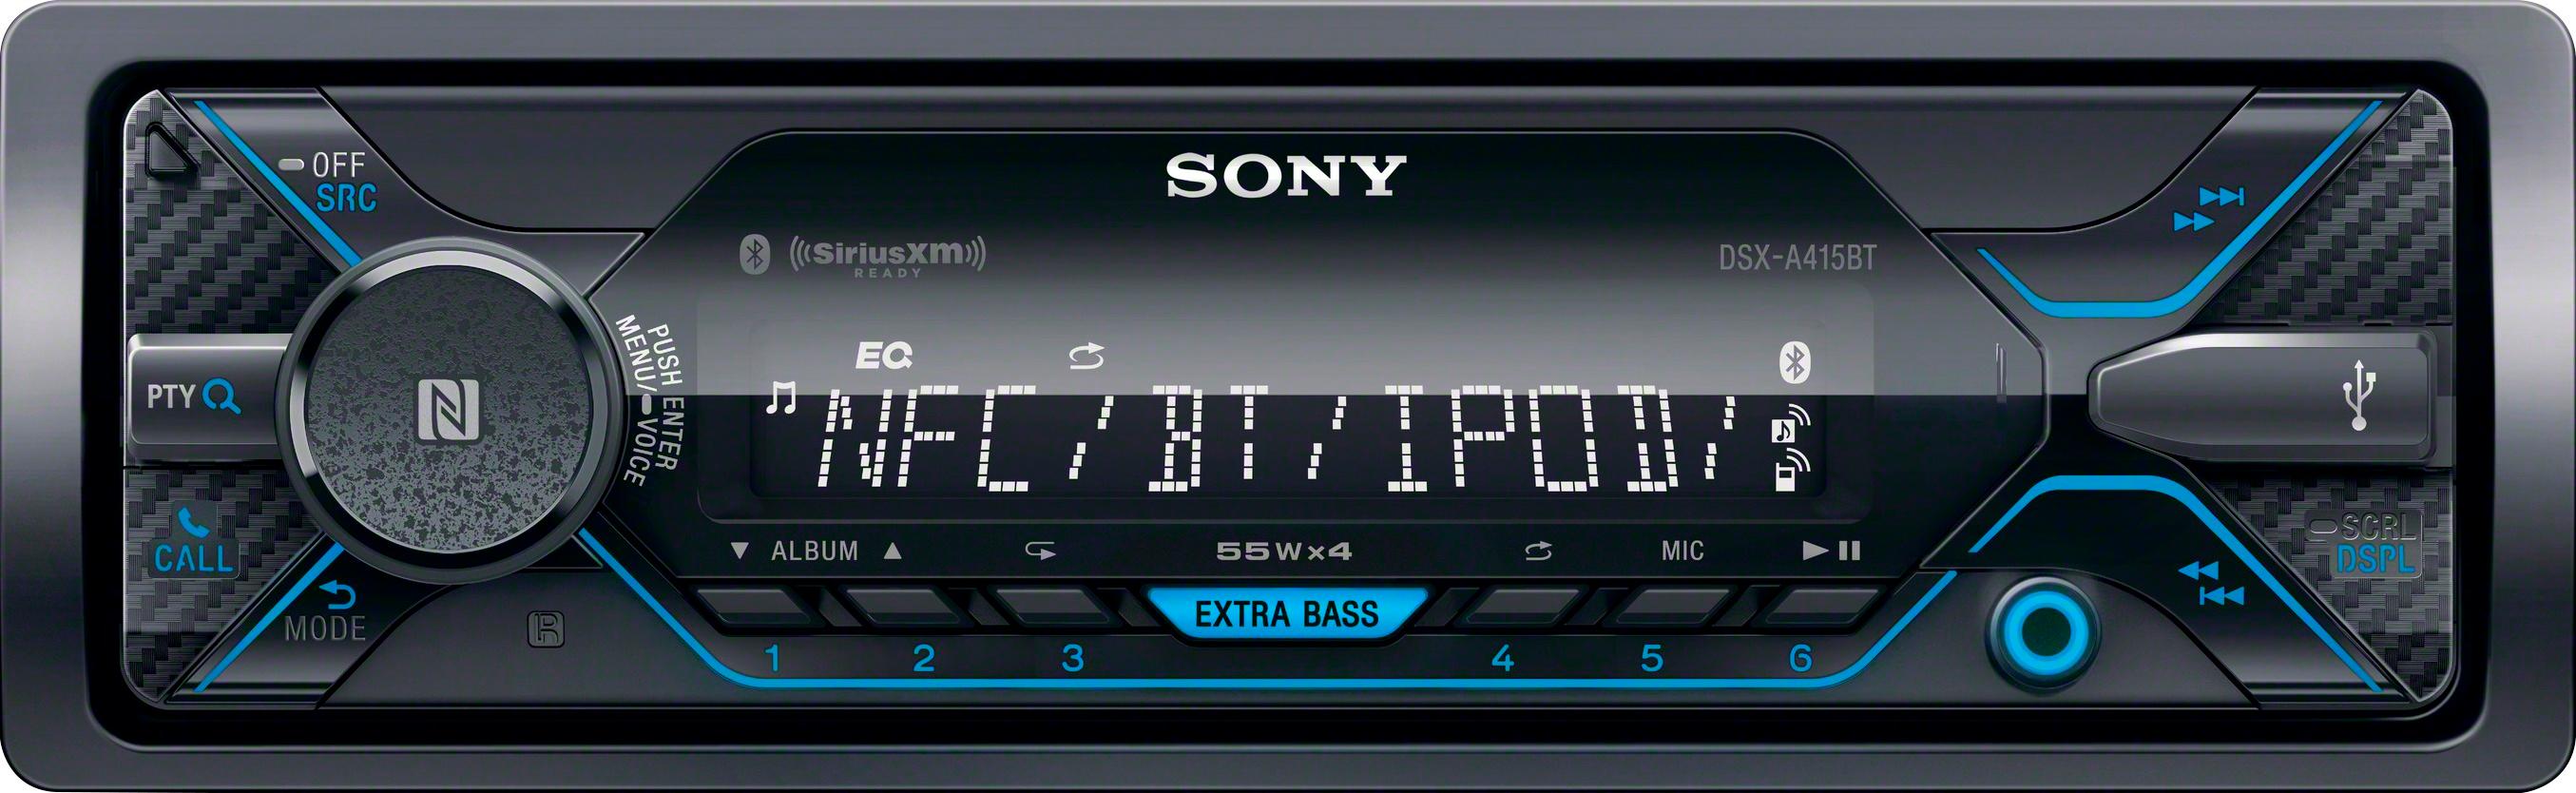 Sony DSX-A415BT Digital Media Receiver with Bluetooth & Satellite Radio